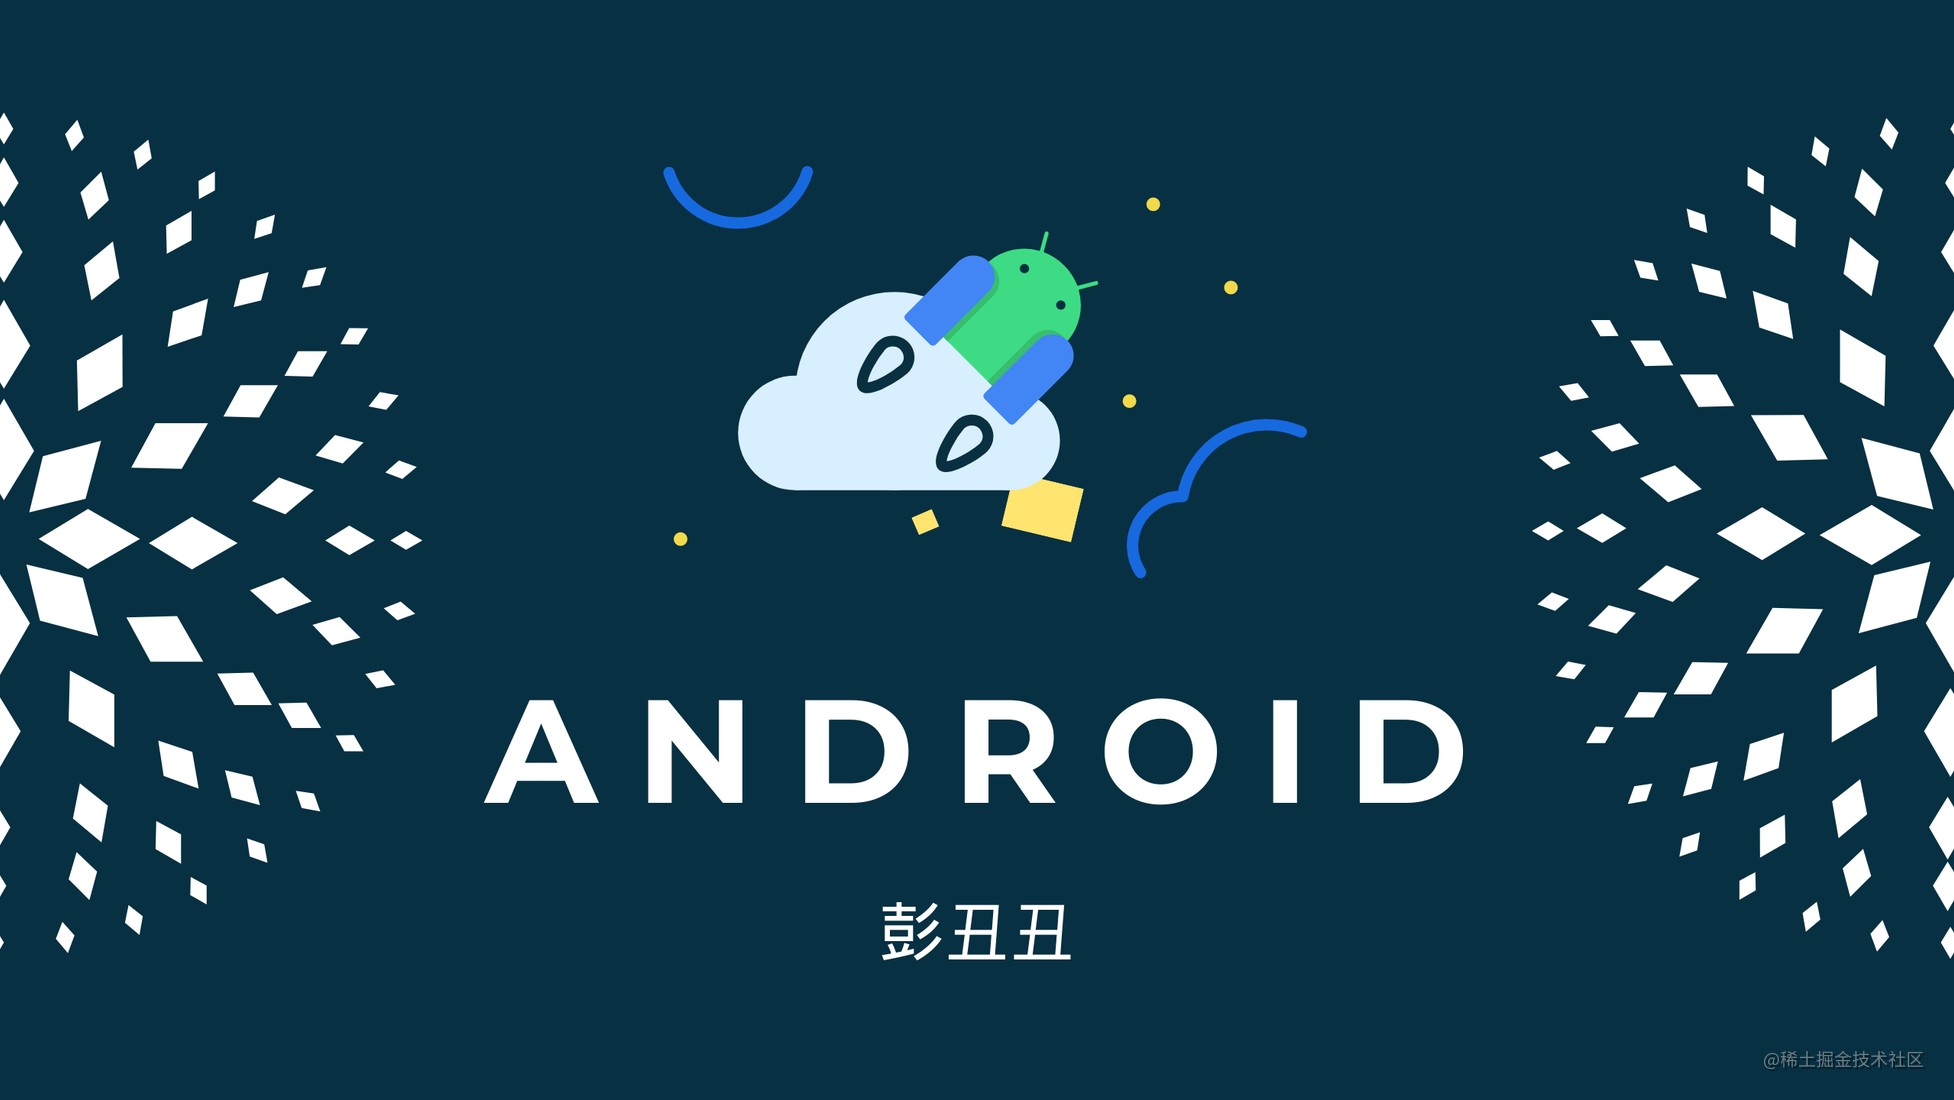 Android | ContentProvider 筑基篇 | 牛气冲天新年征文